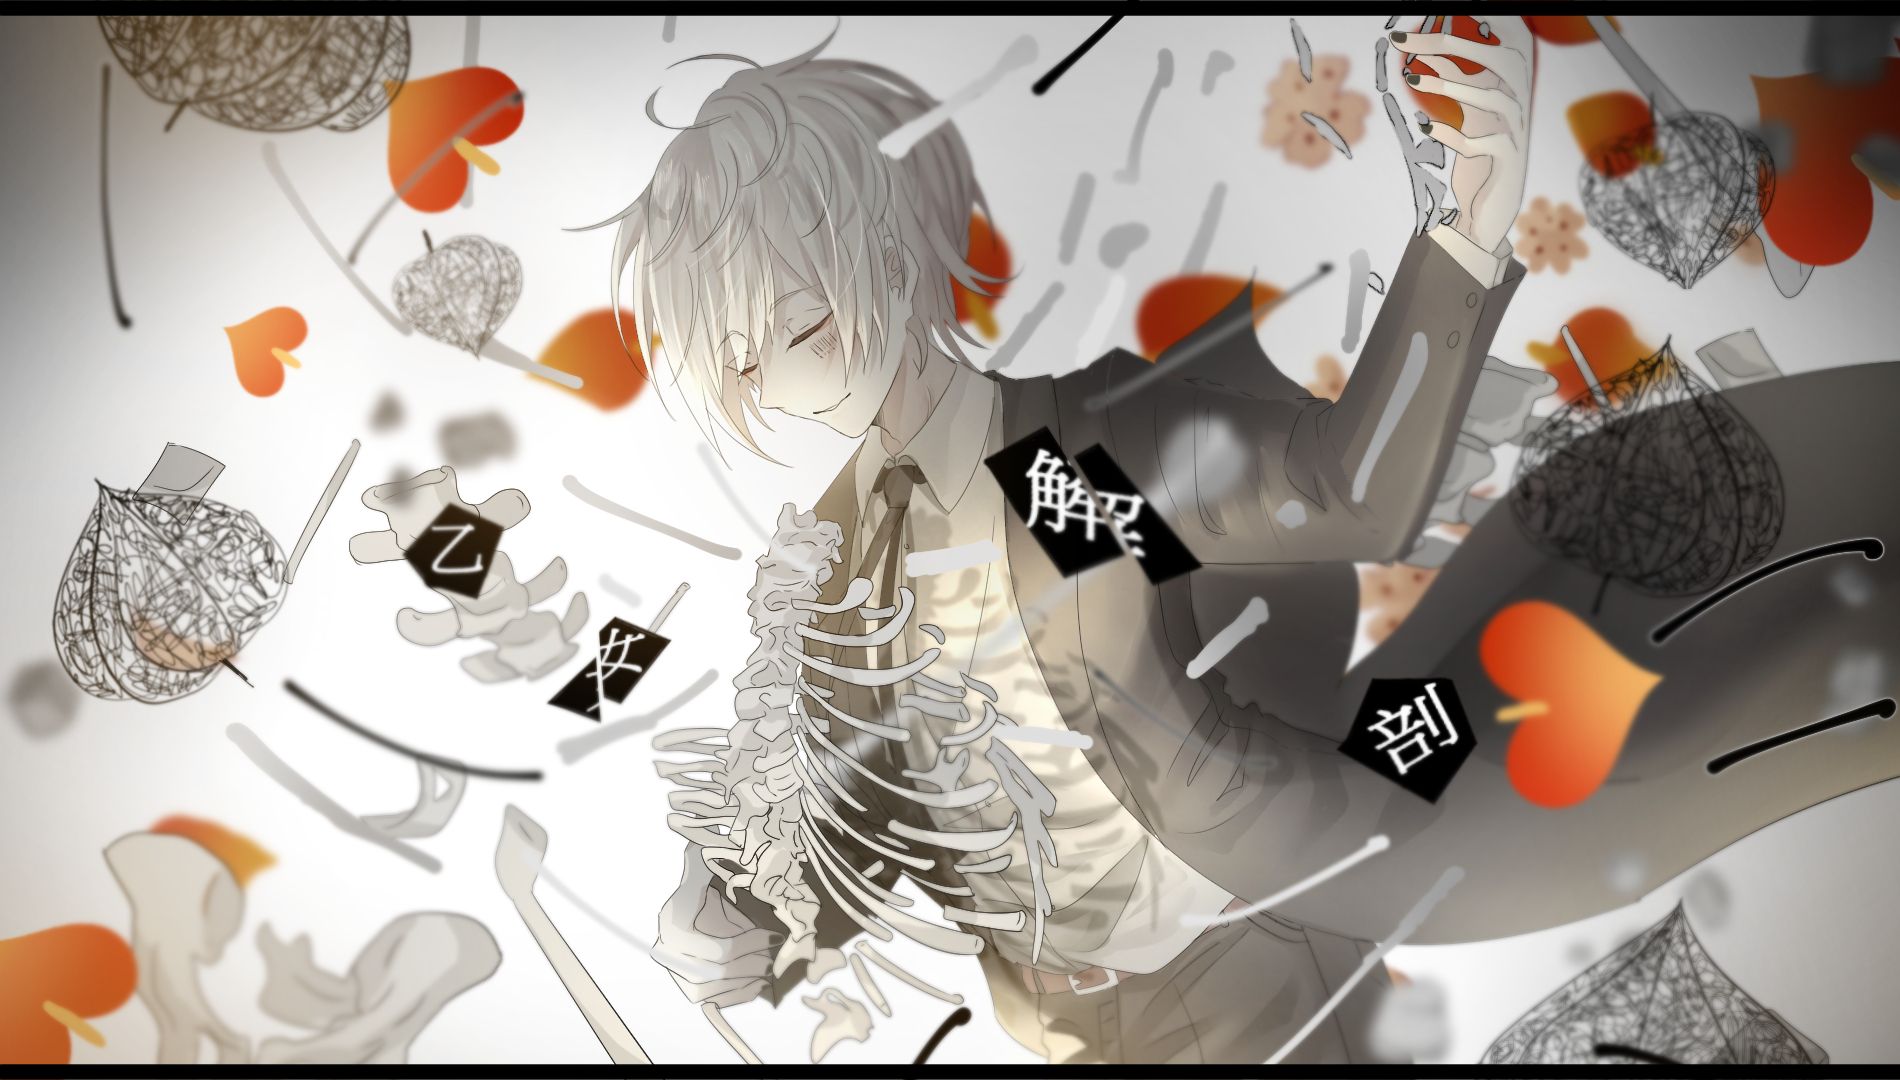 Utaite, white hair, Japanese characters, skeleton, Vocaloid, petals, smiling, bones, Male, barcode, suitsx1080 Wallpaper